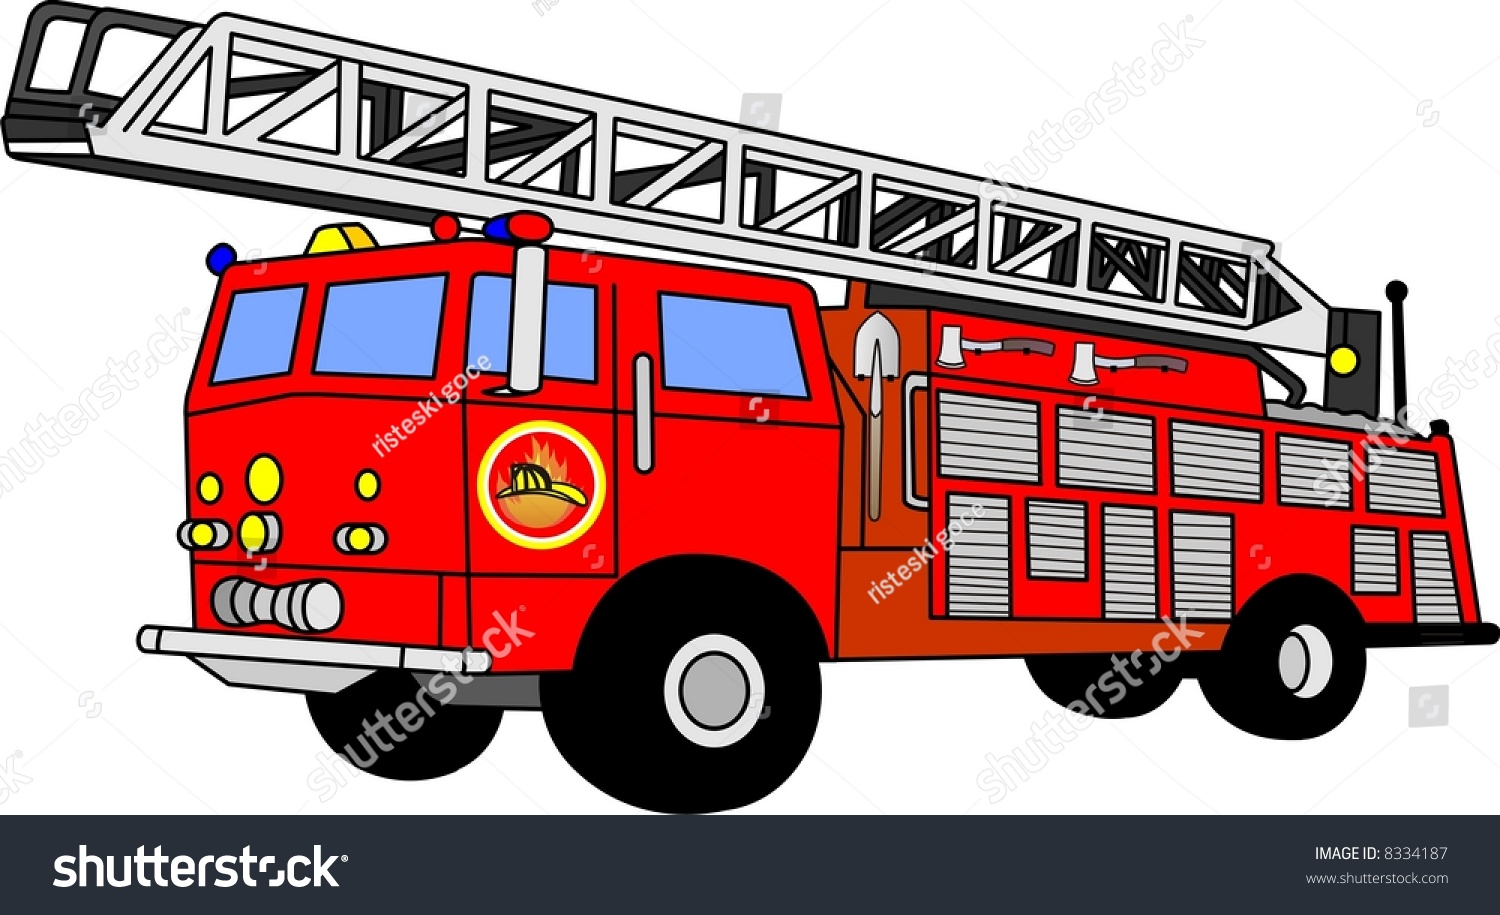 fire service clip art - photo #12